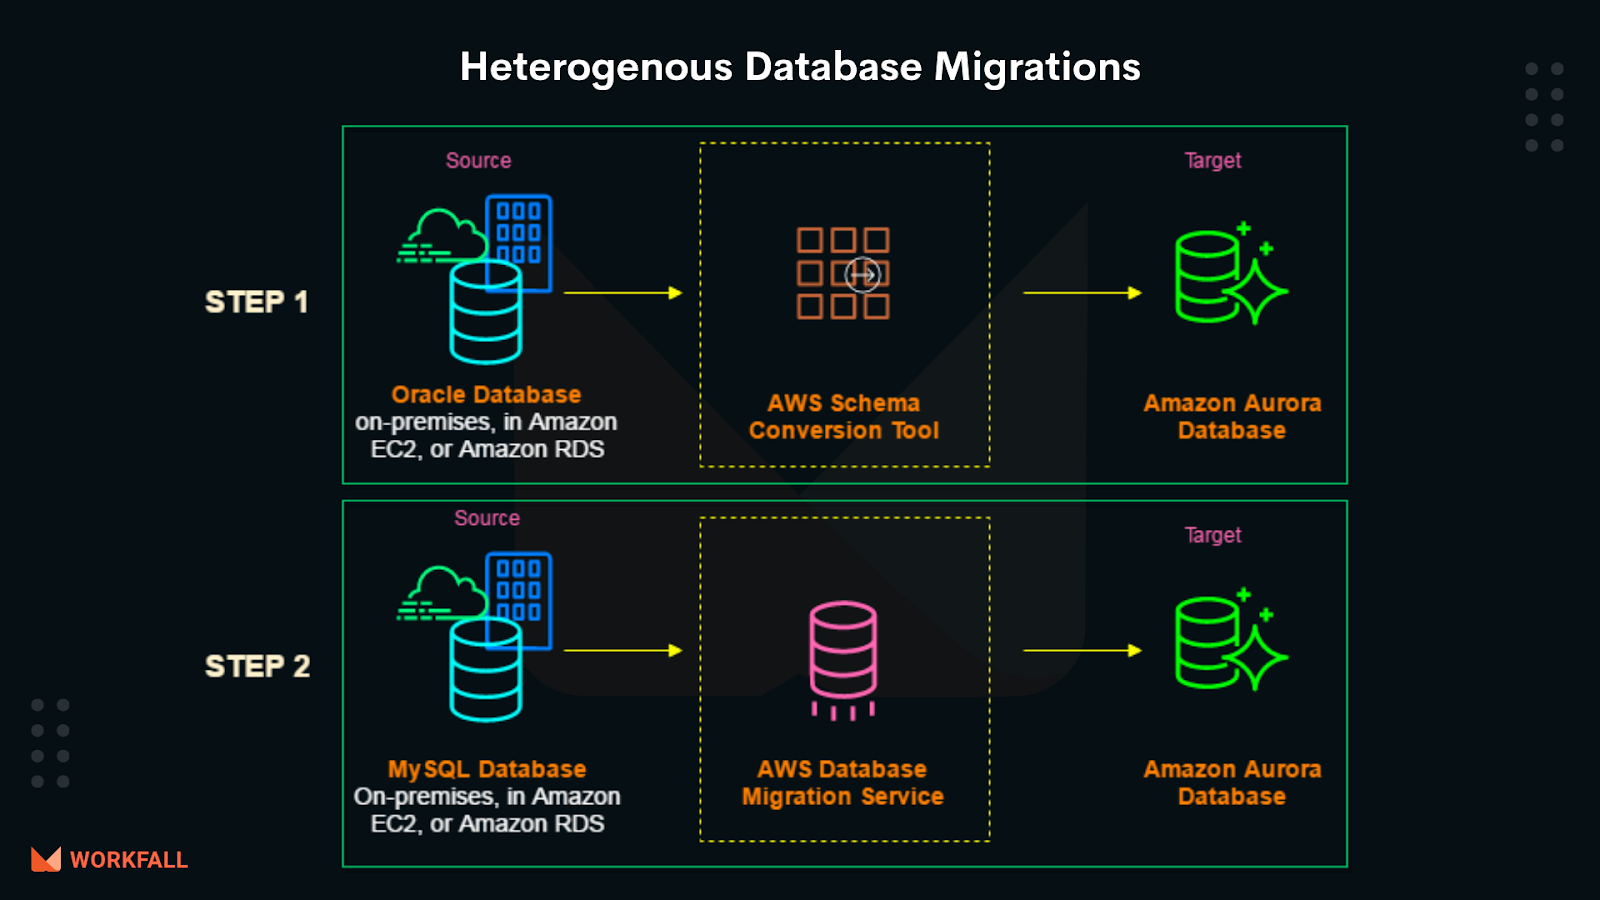 Heterogeneous Database Migration